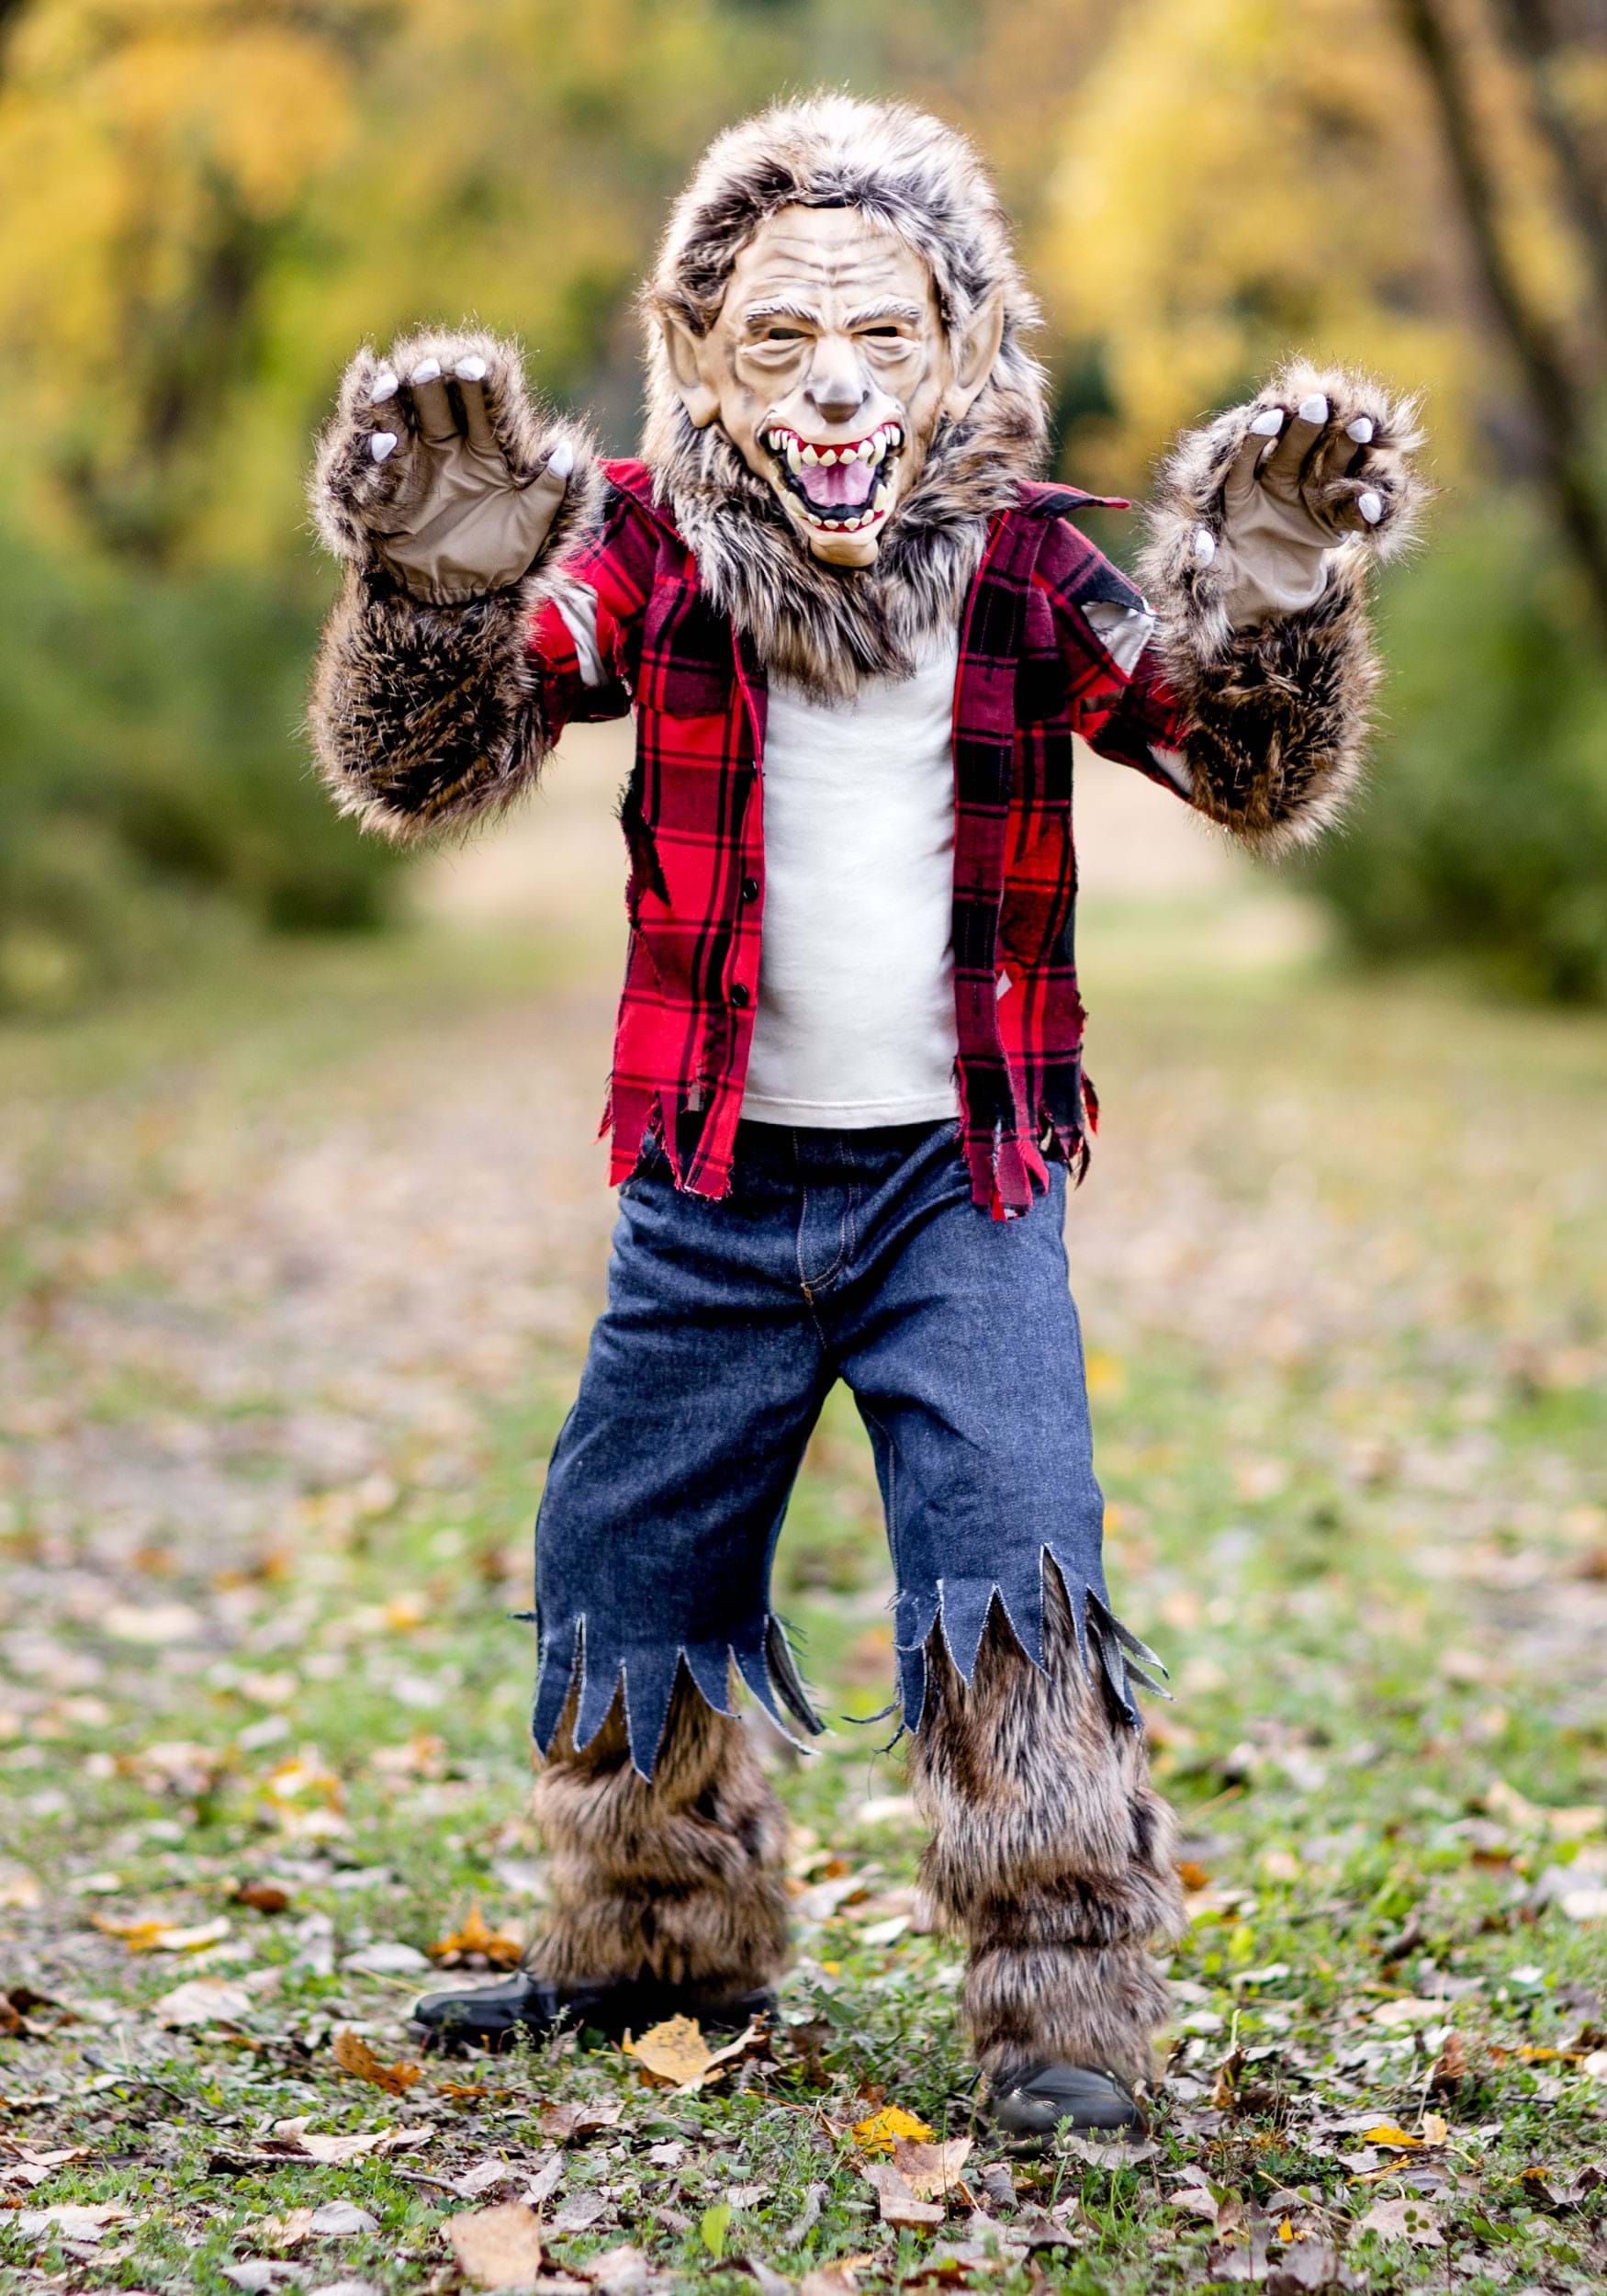 Wolfman costume